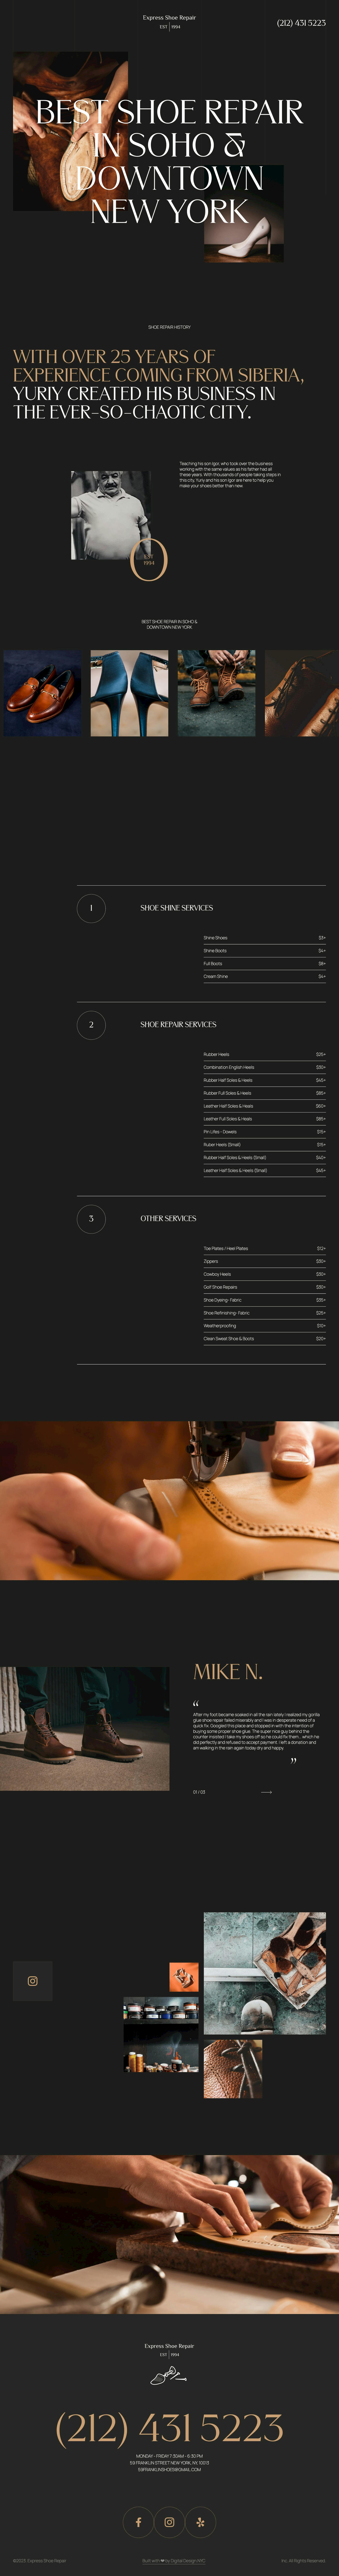 Express Shoe Repair Website Screenshot